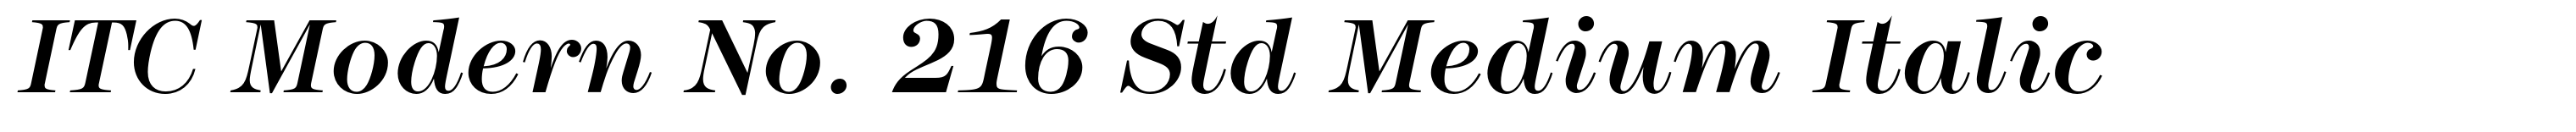 ITC Modern No. 216 Std Medium Italic